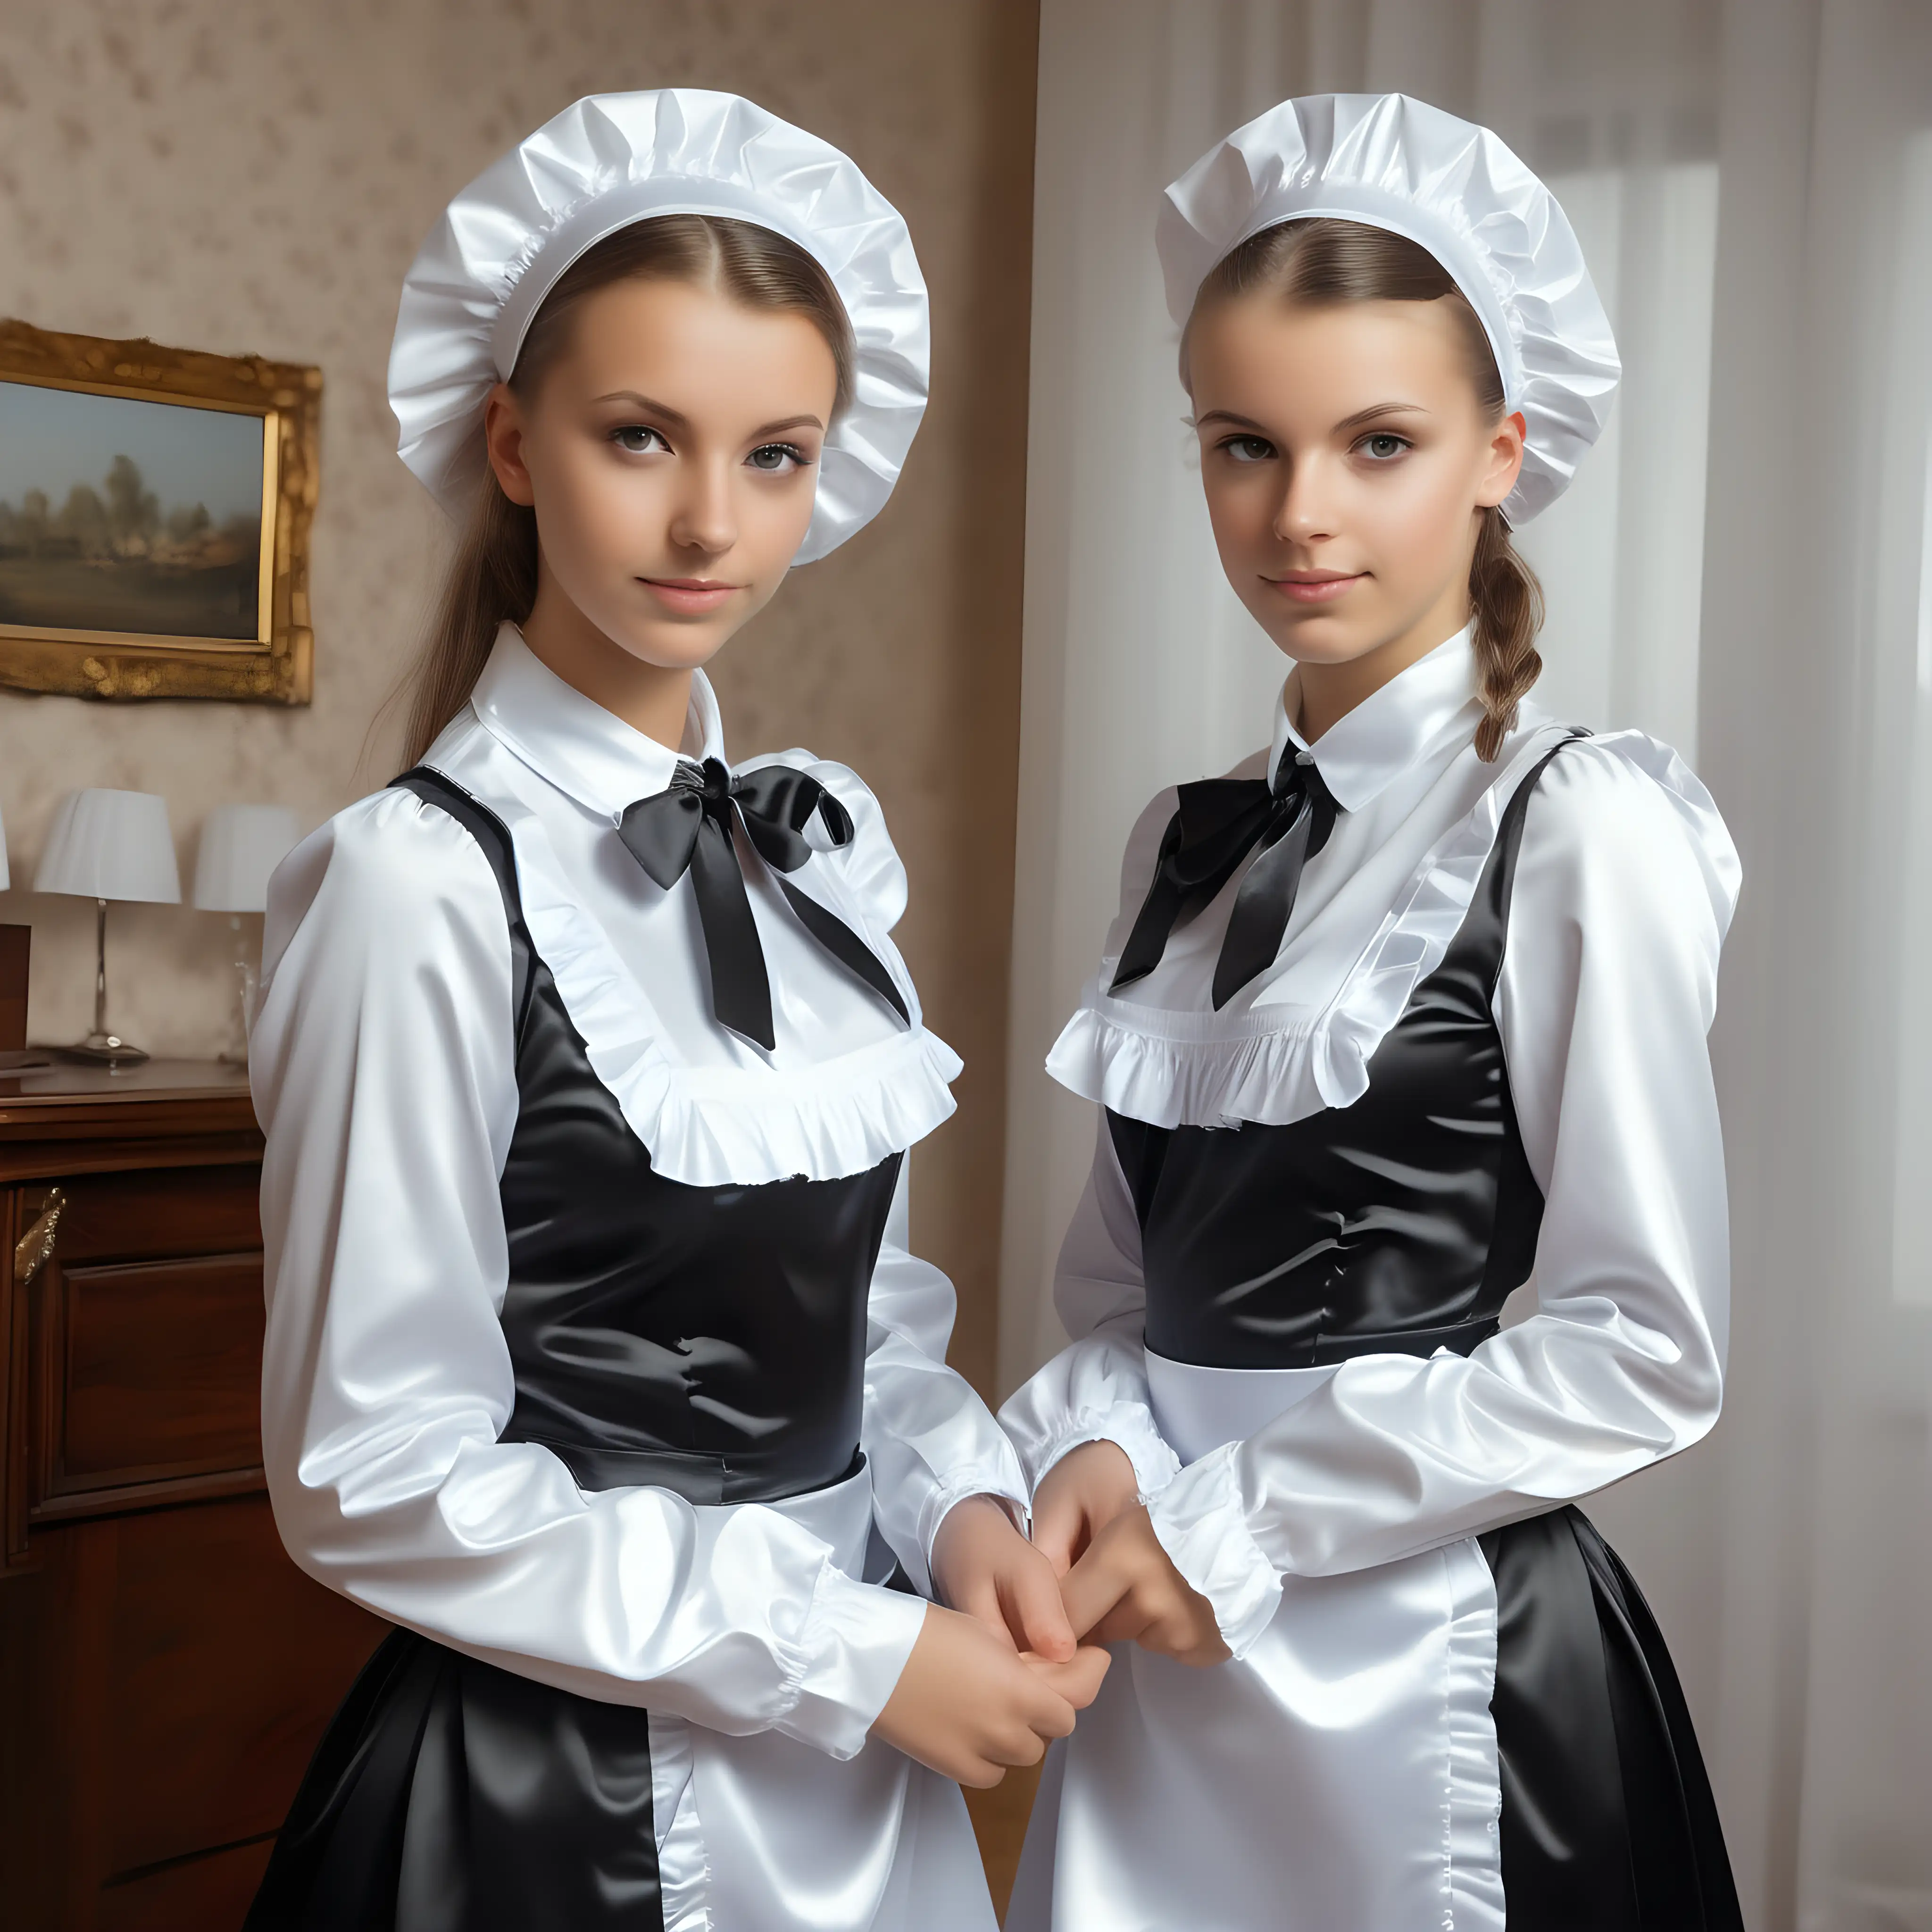 European Girl in Elegant Satin Maid Uniforms